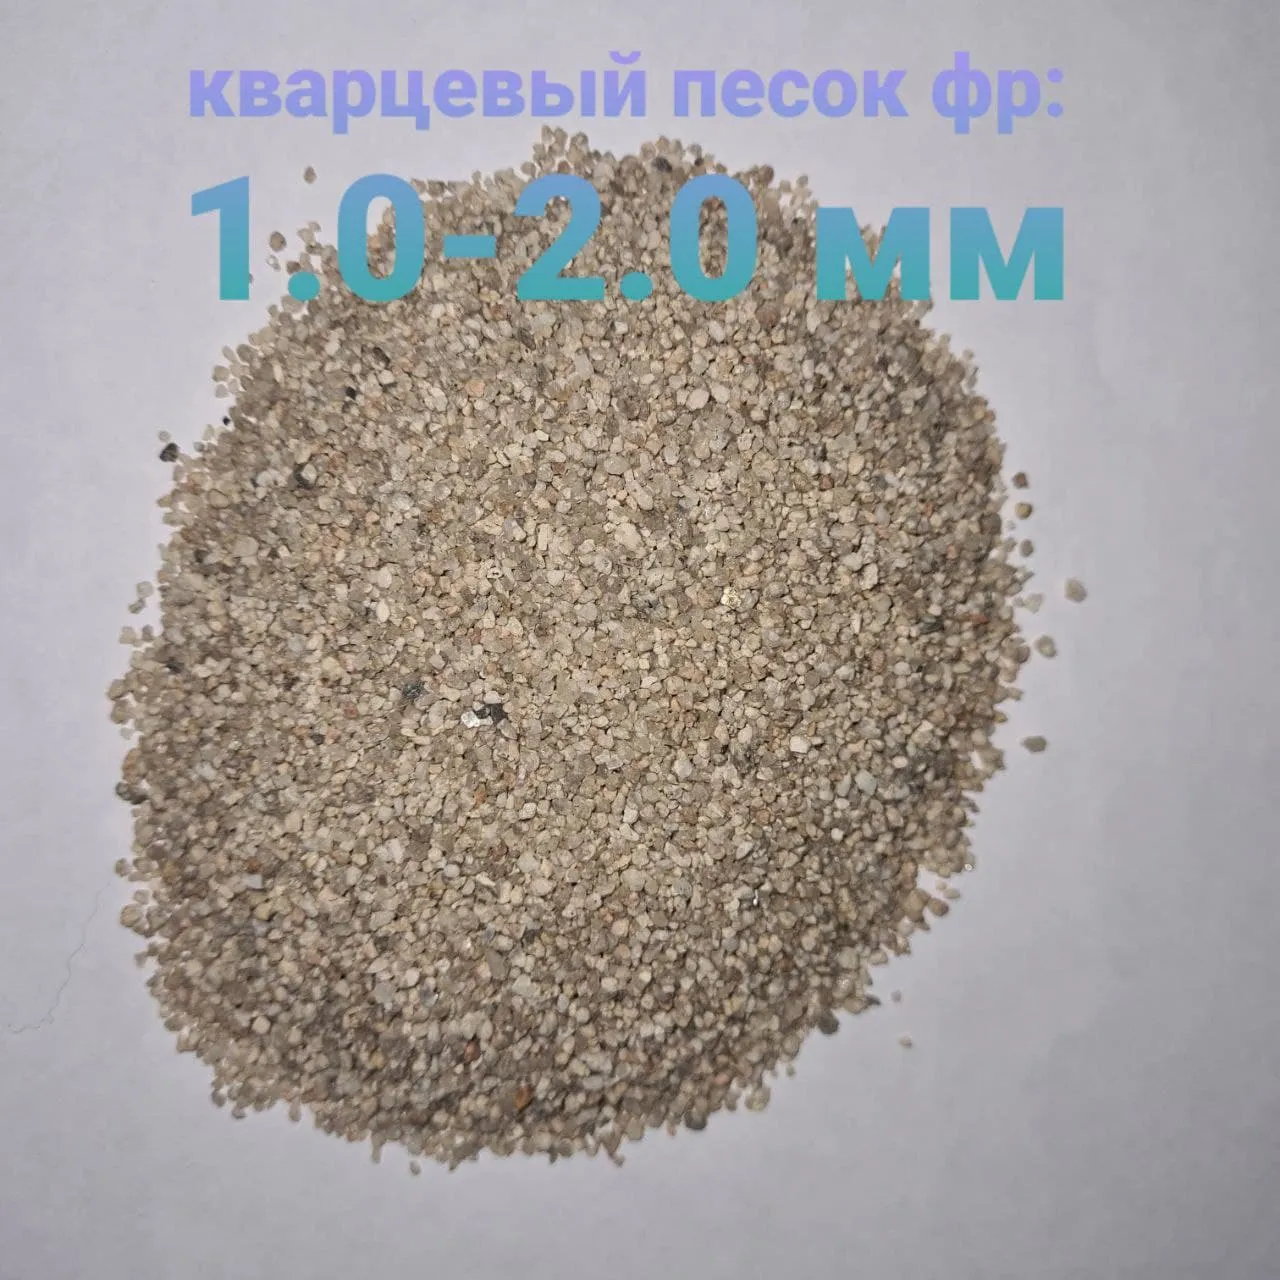 Кварцевый песок фр 1,0-2,0 мм#1